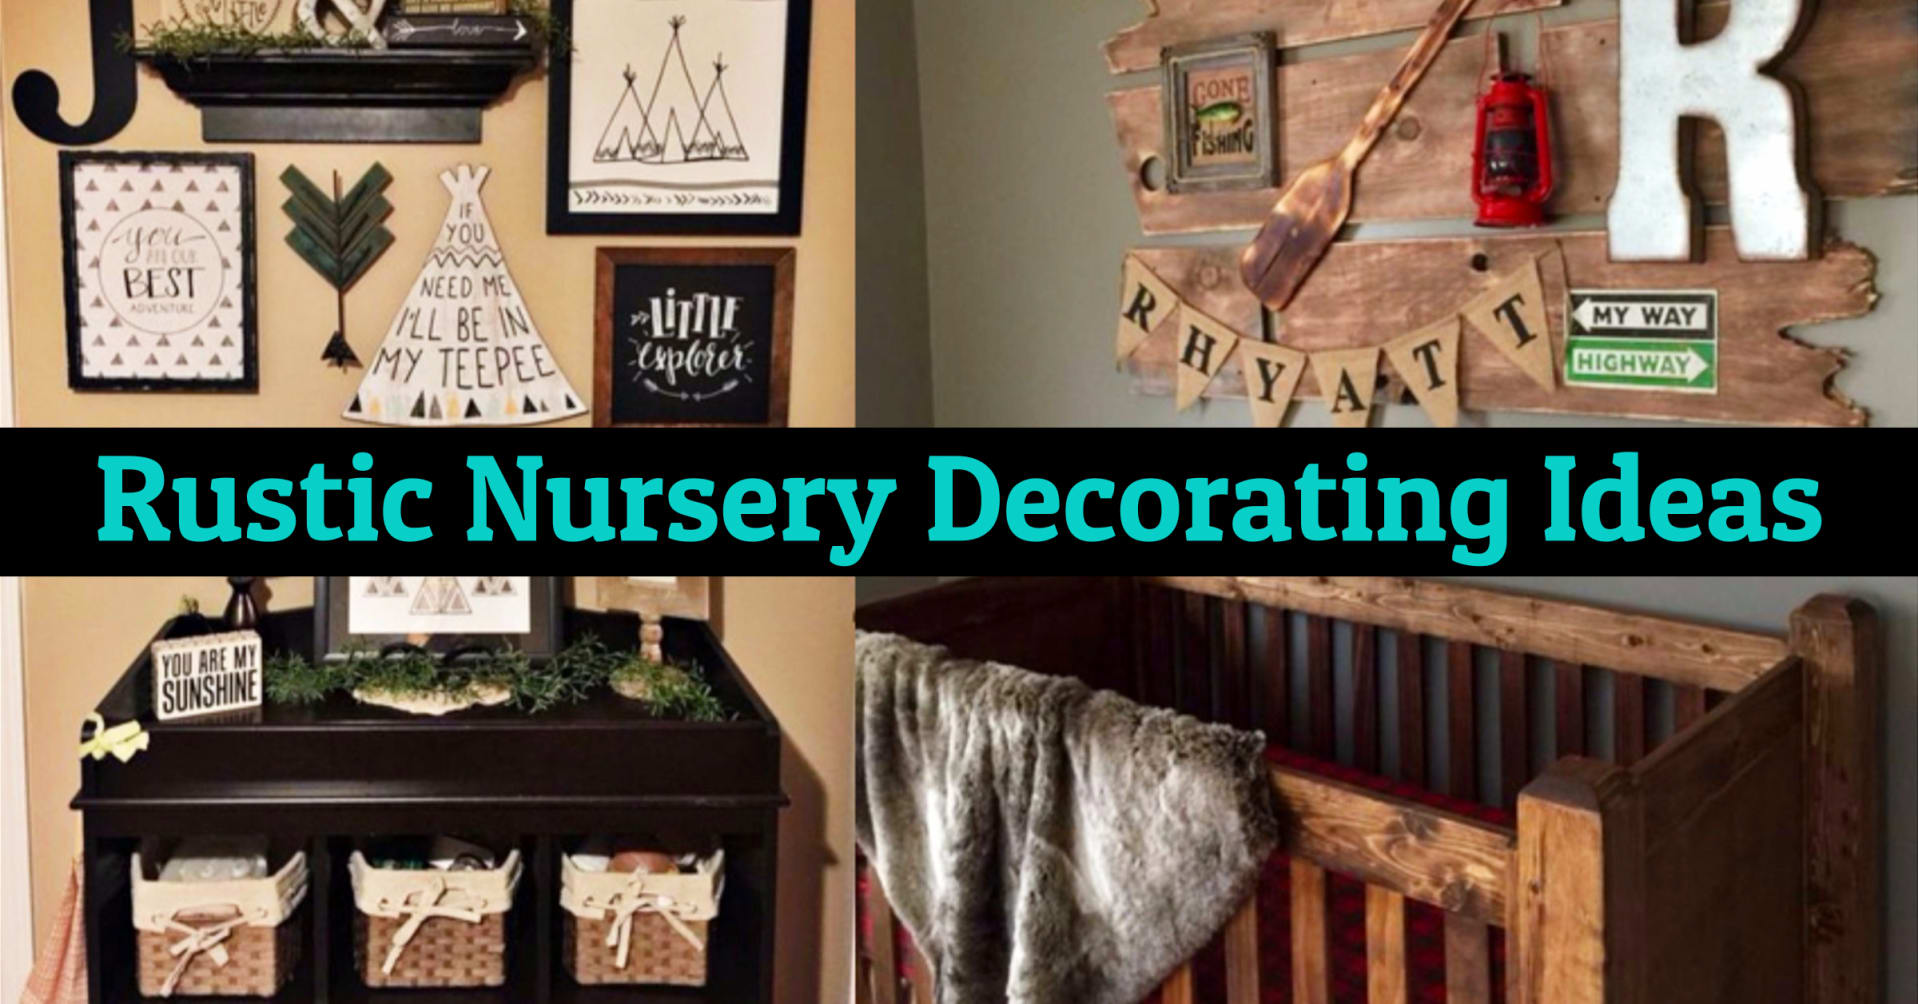 Rustic Baby Room Ideas rustic nursery ideas for baby boys